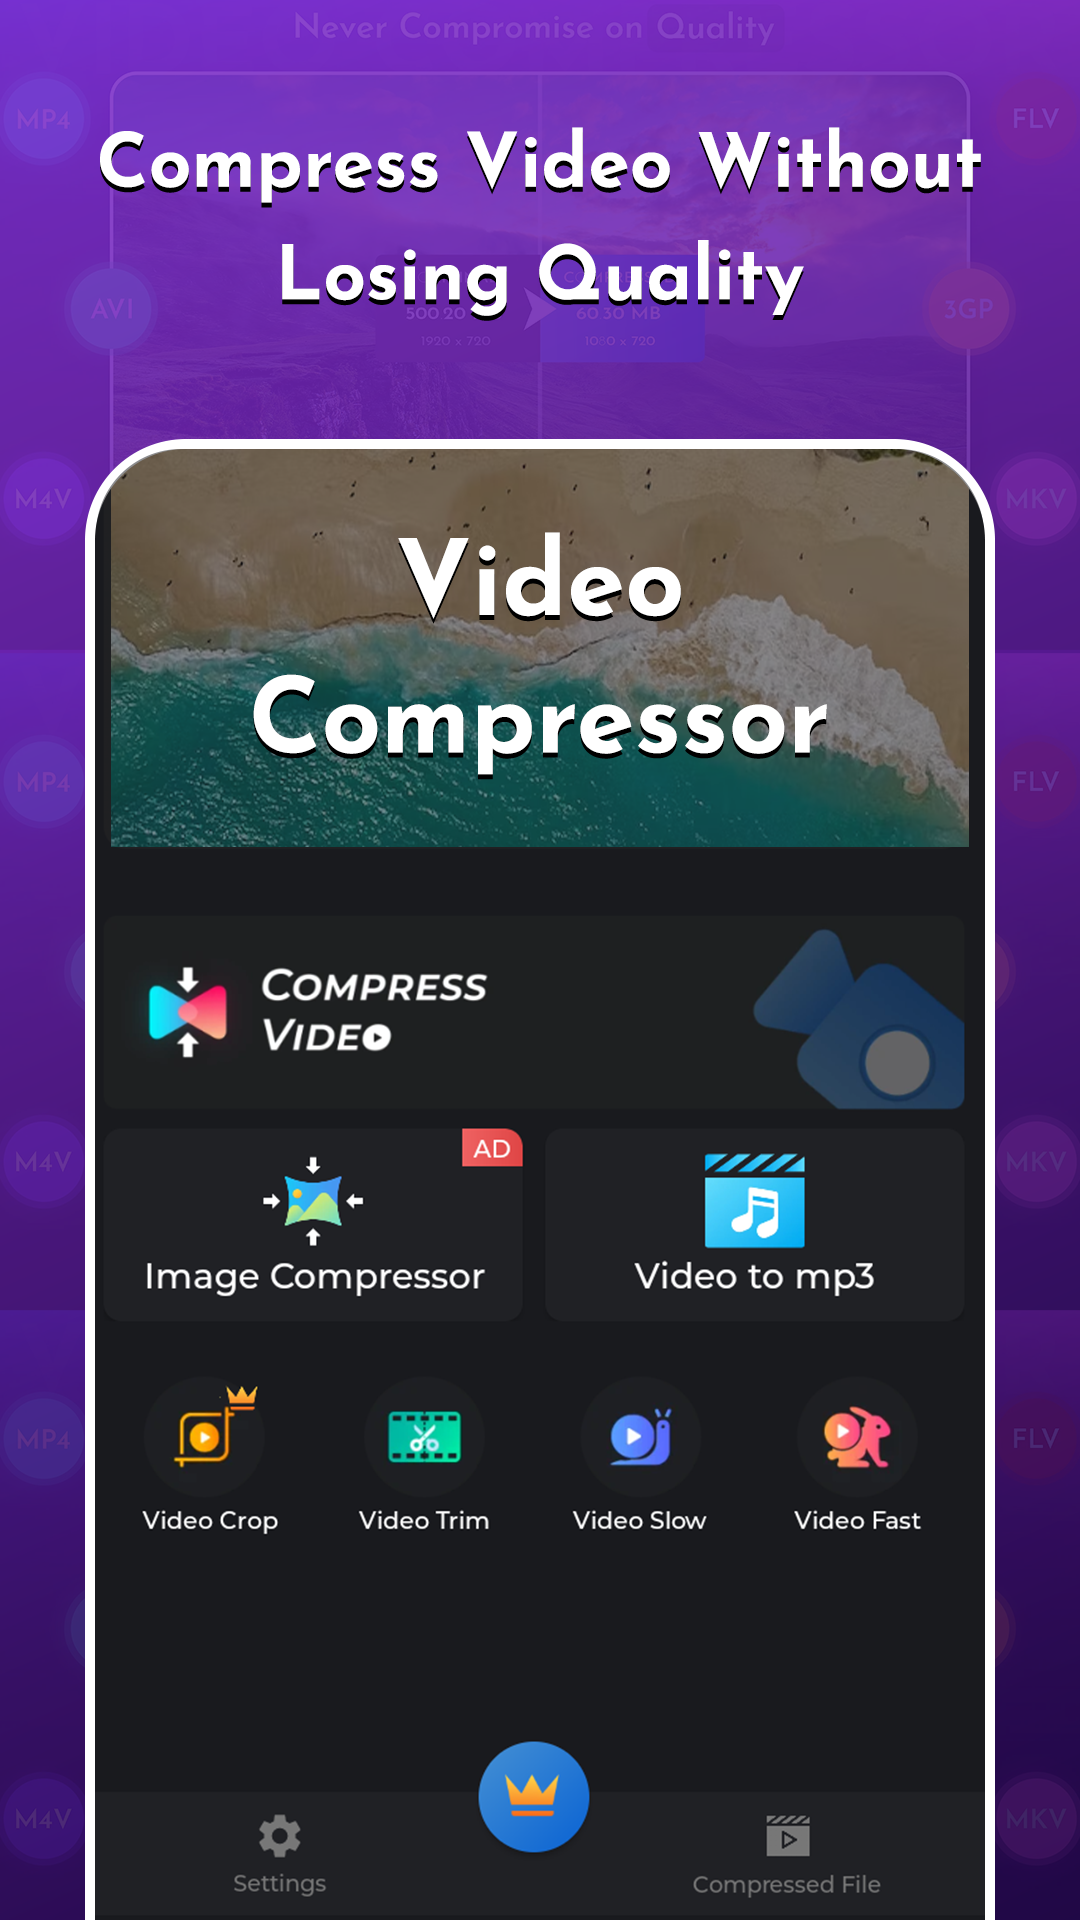 video-compressor